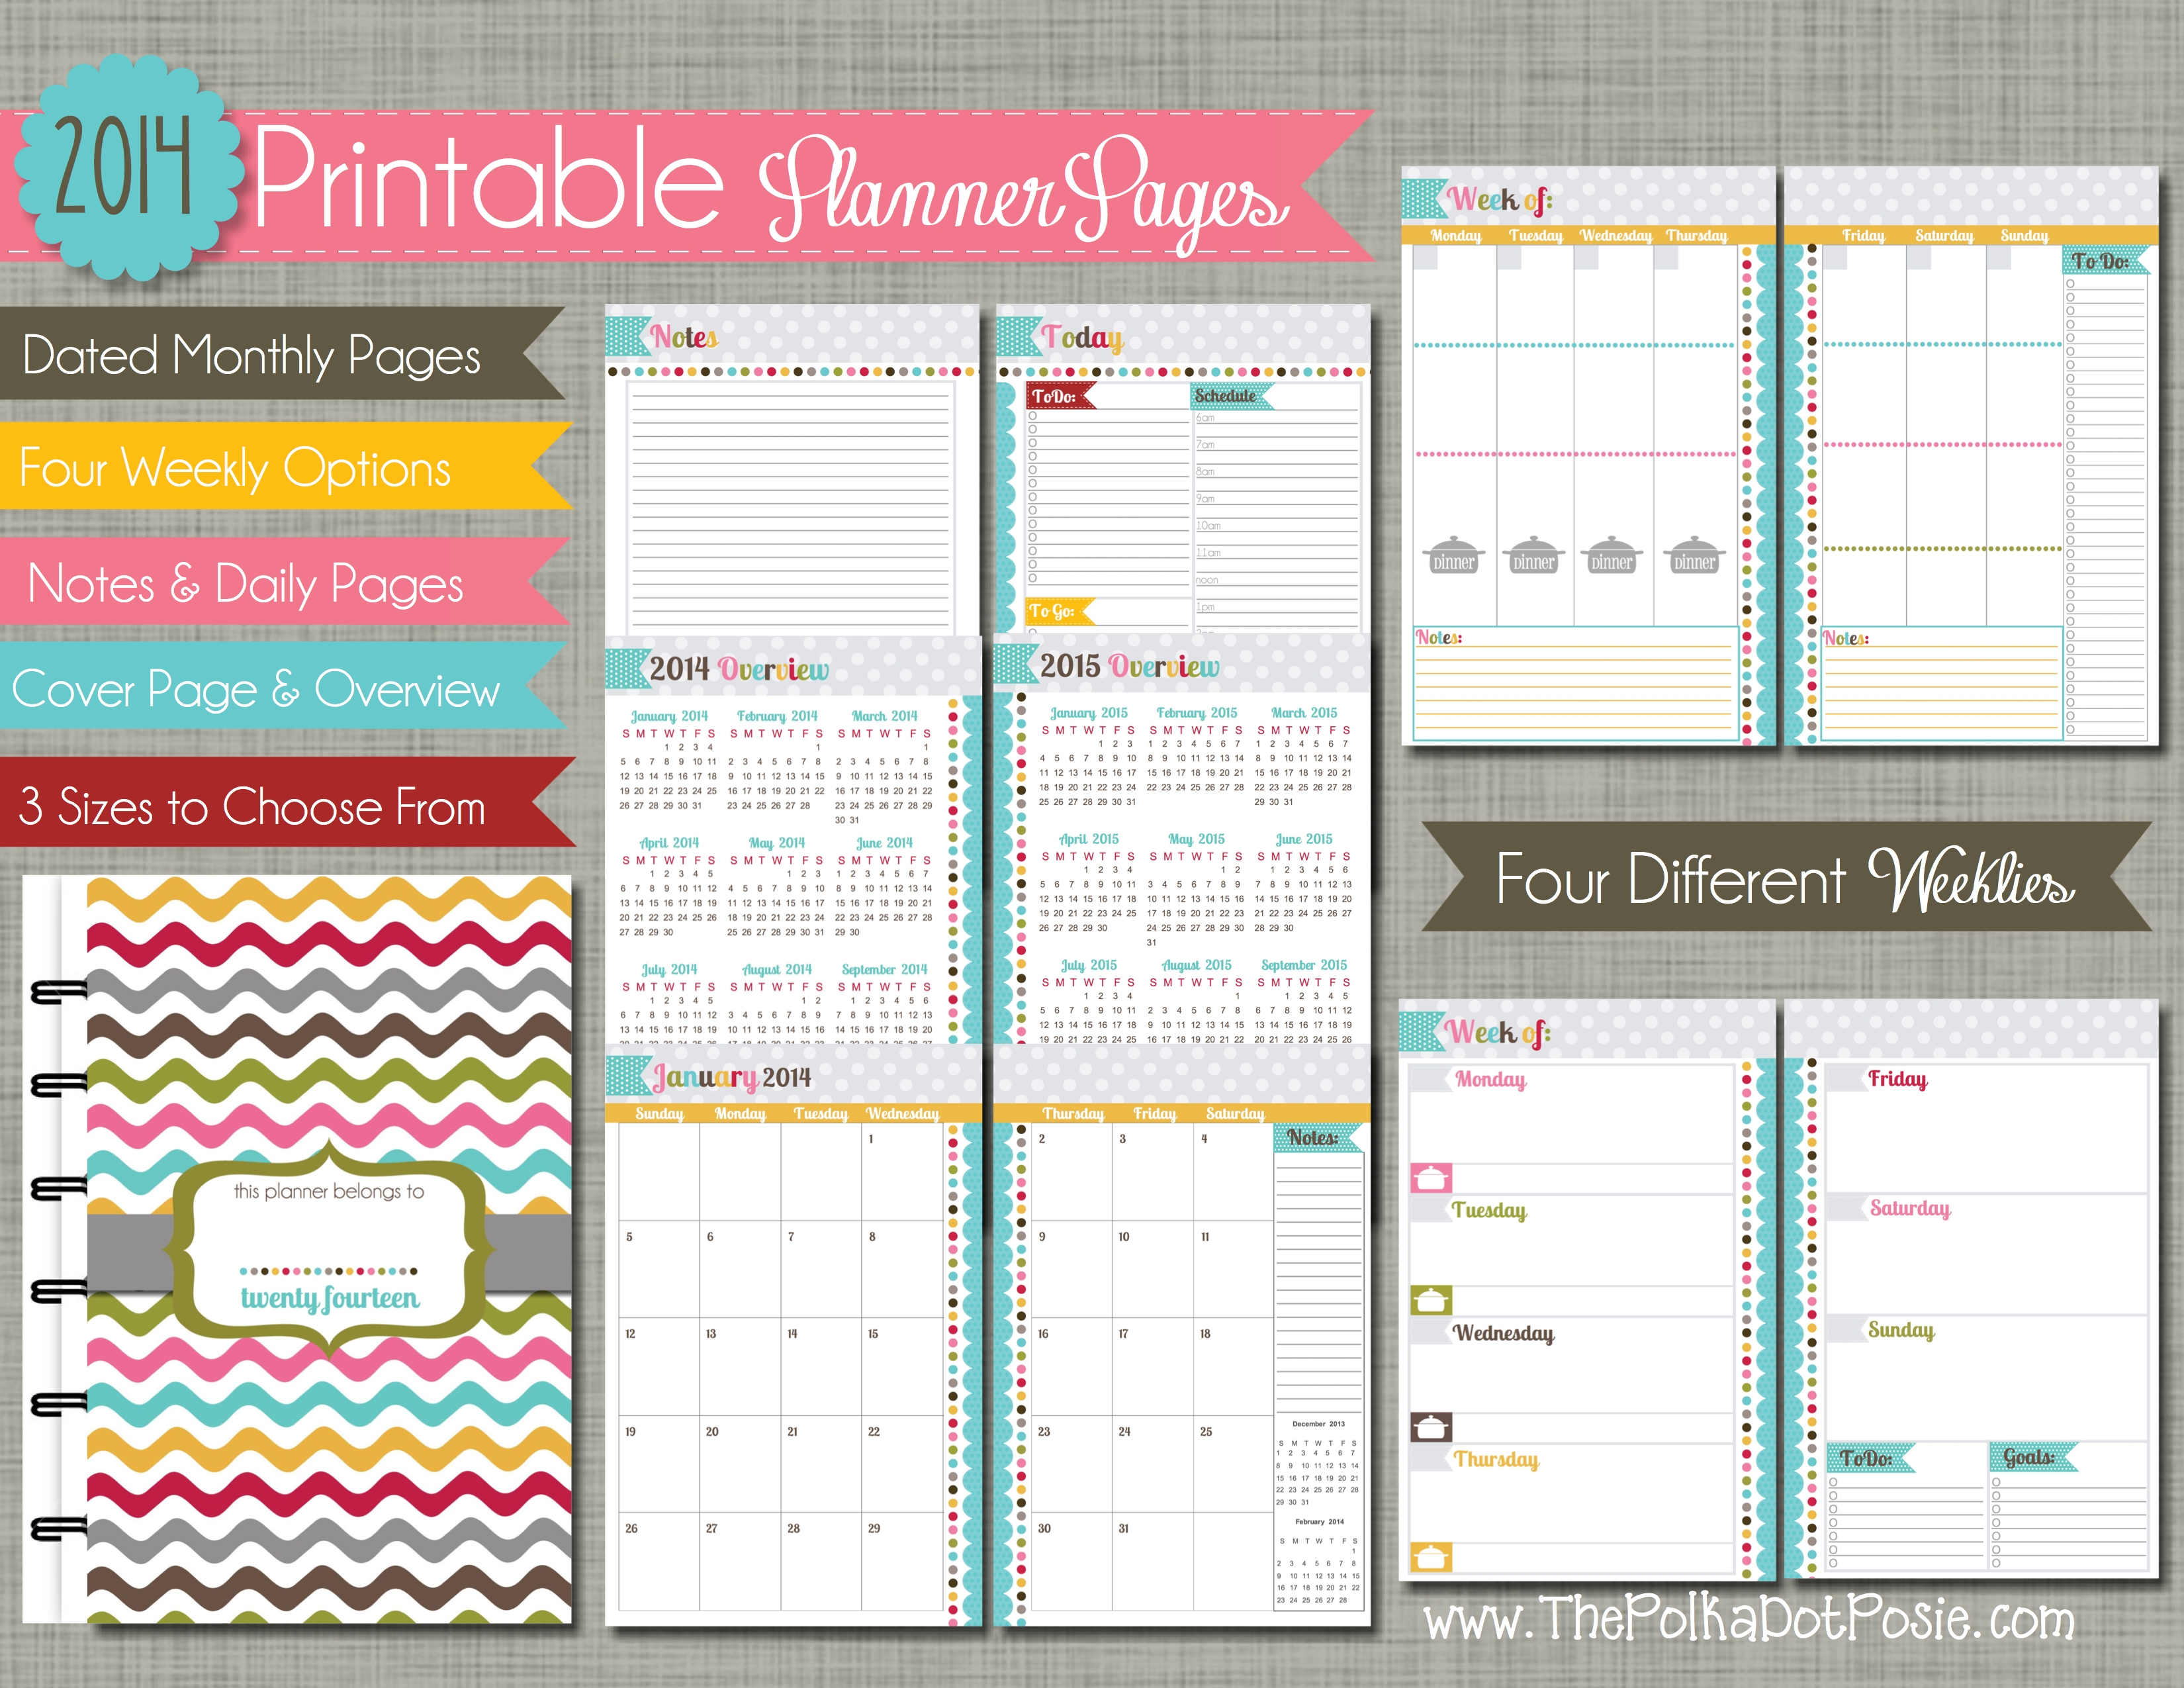 8 Best Images of Printable Mini Planner Half Page Weekly Planner